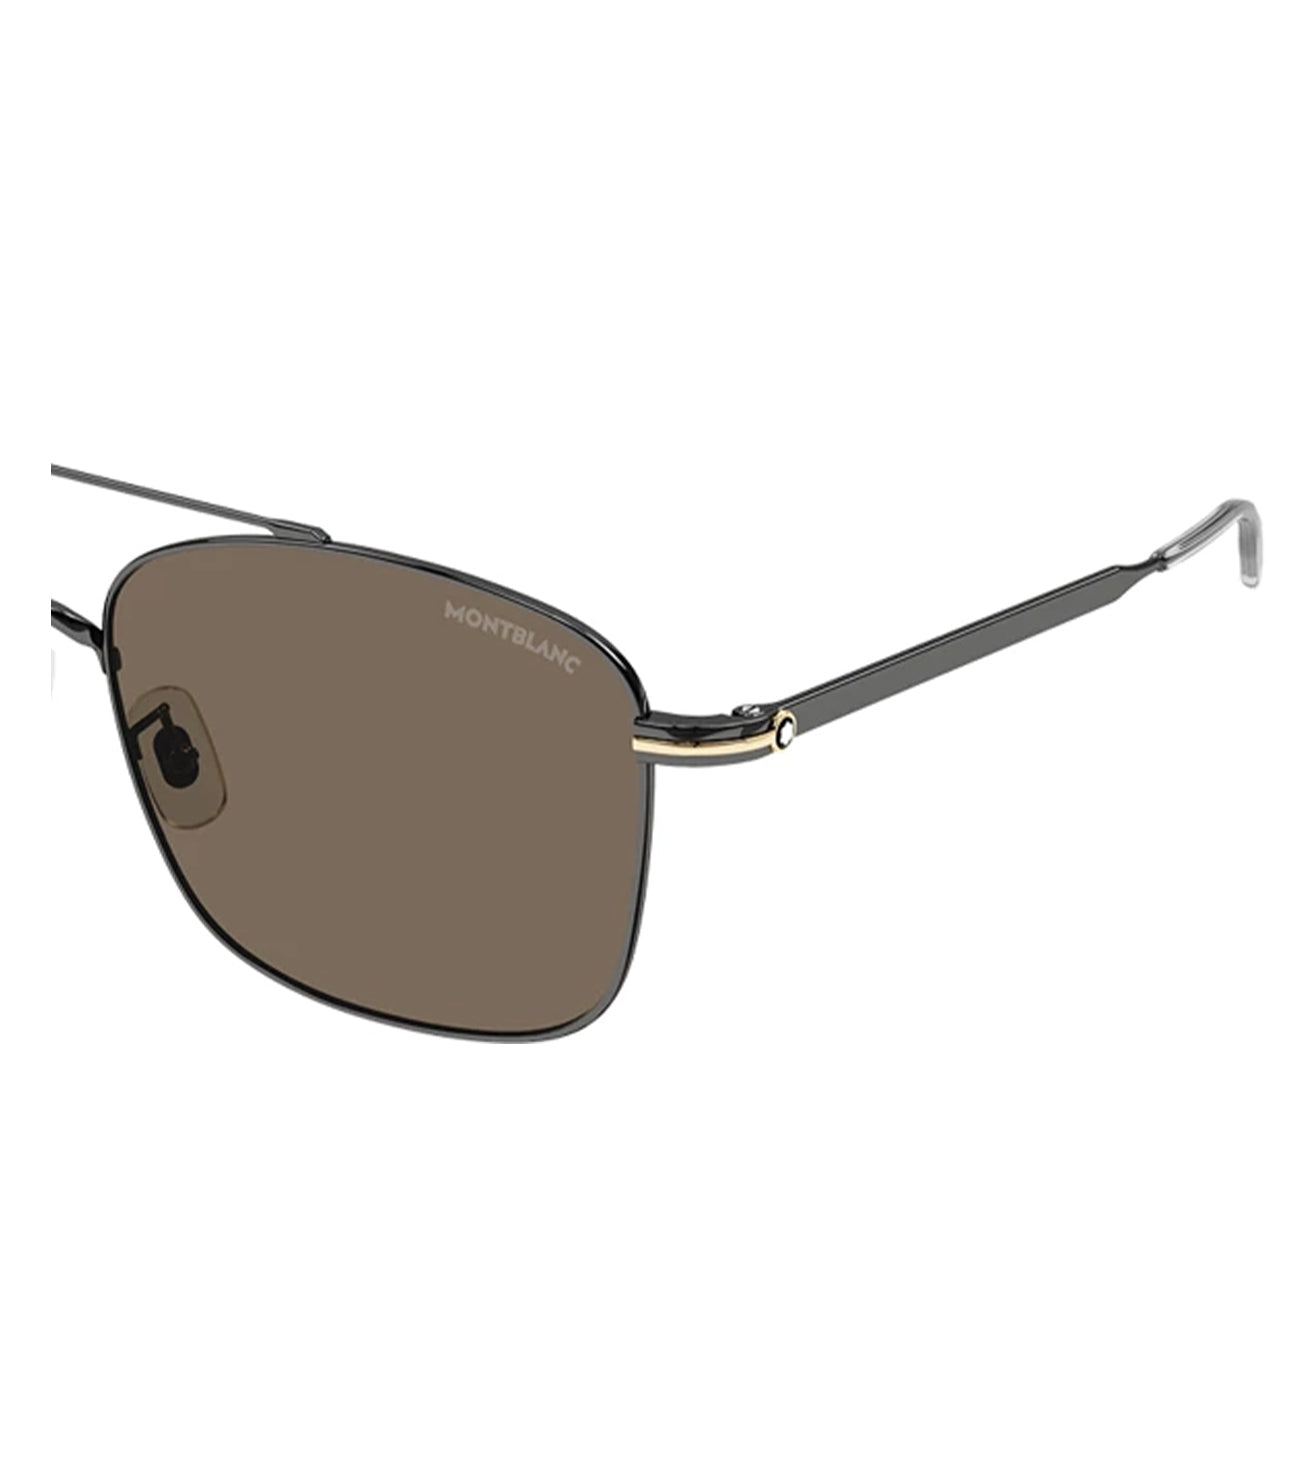 Montblanc Men's Brown Aviator Sunglasses